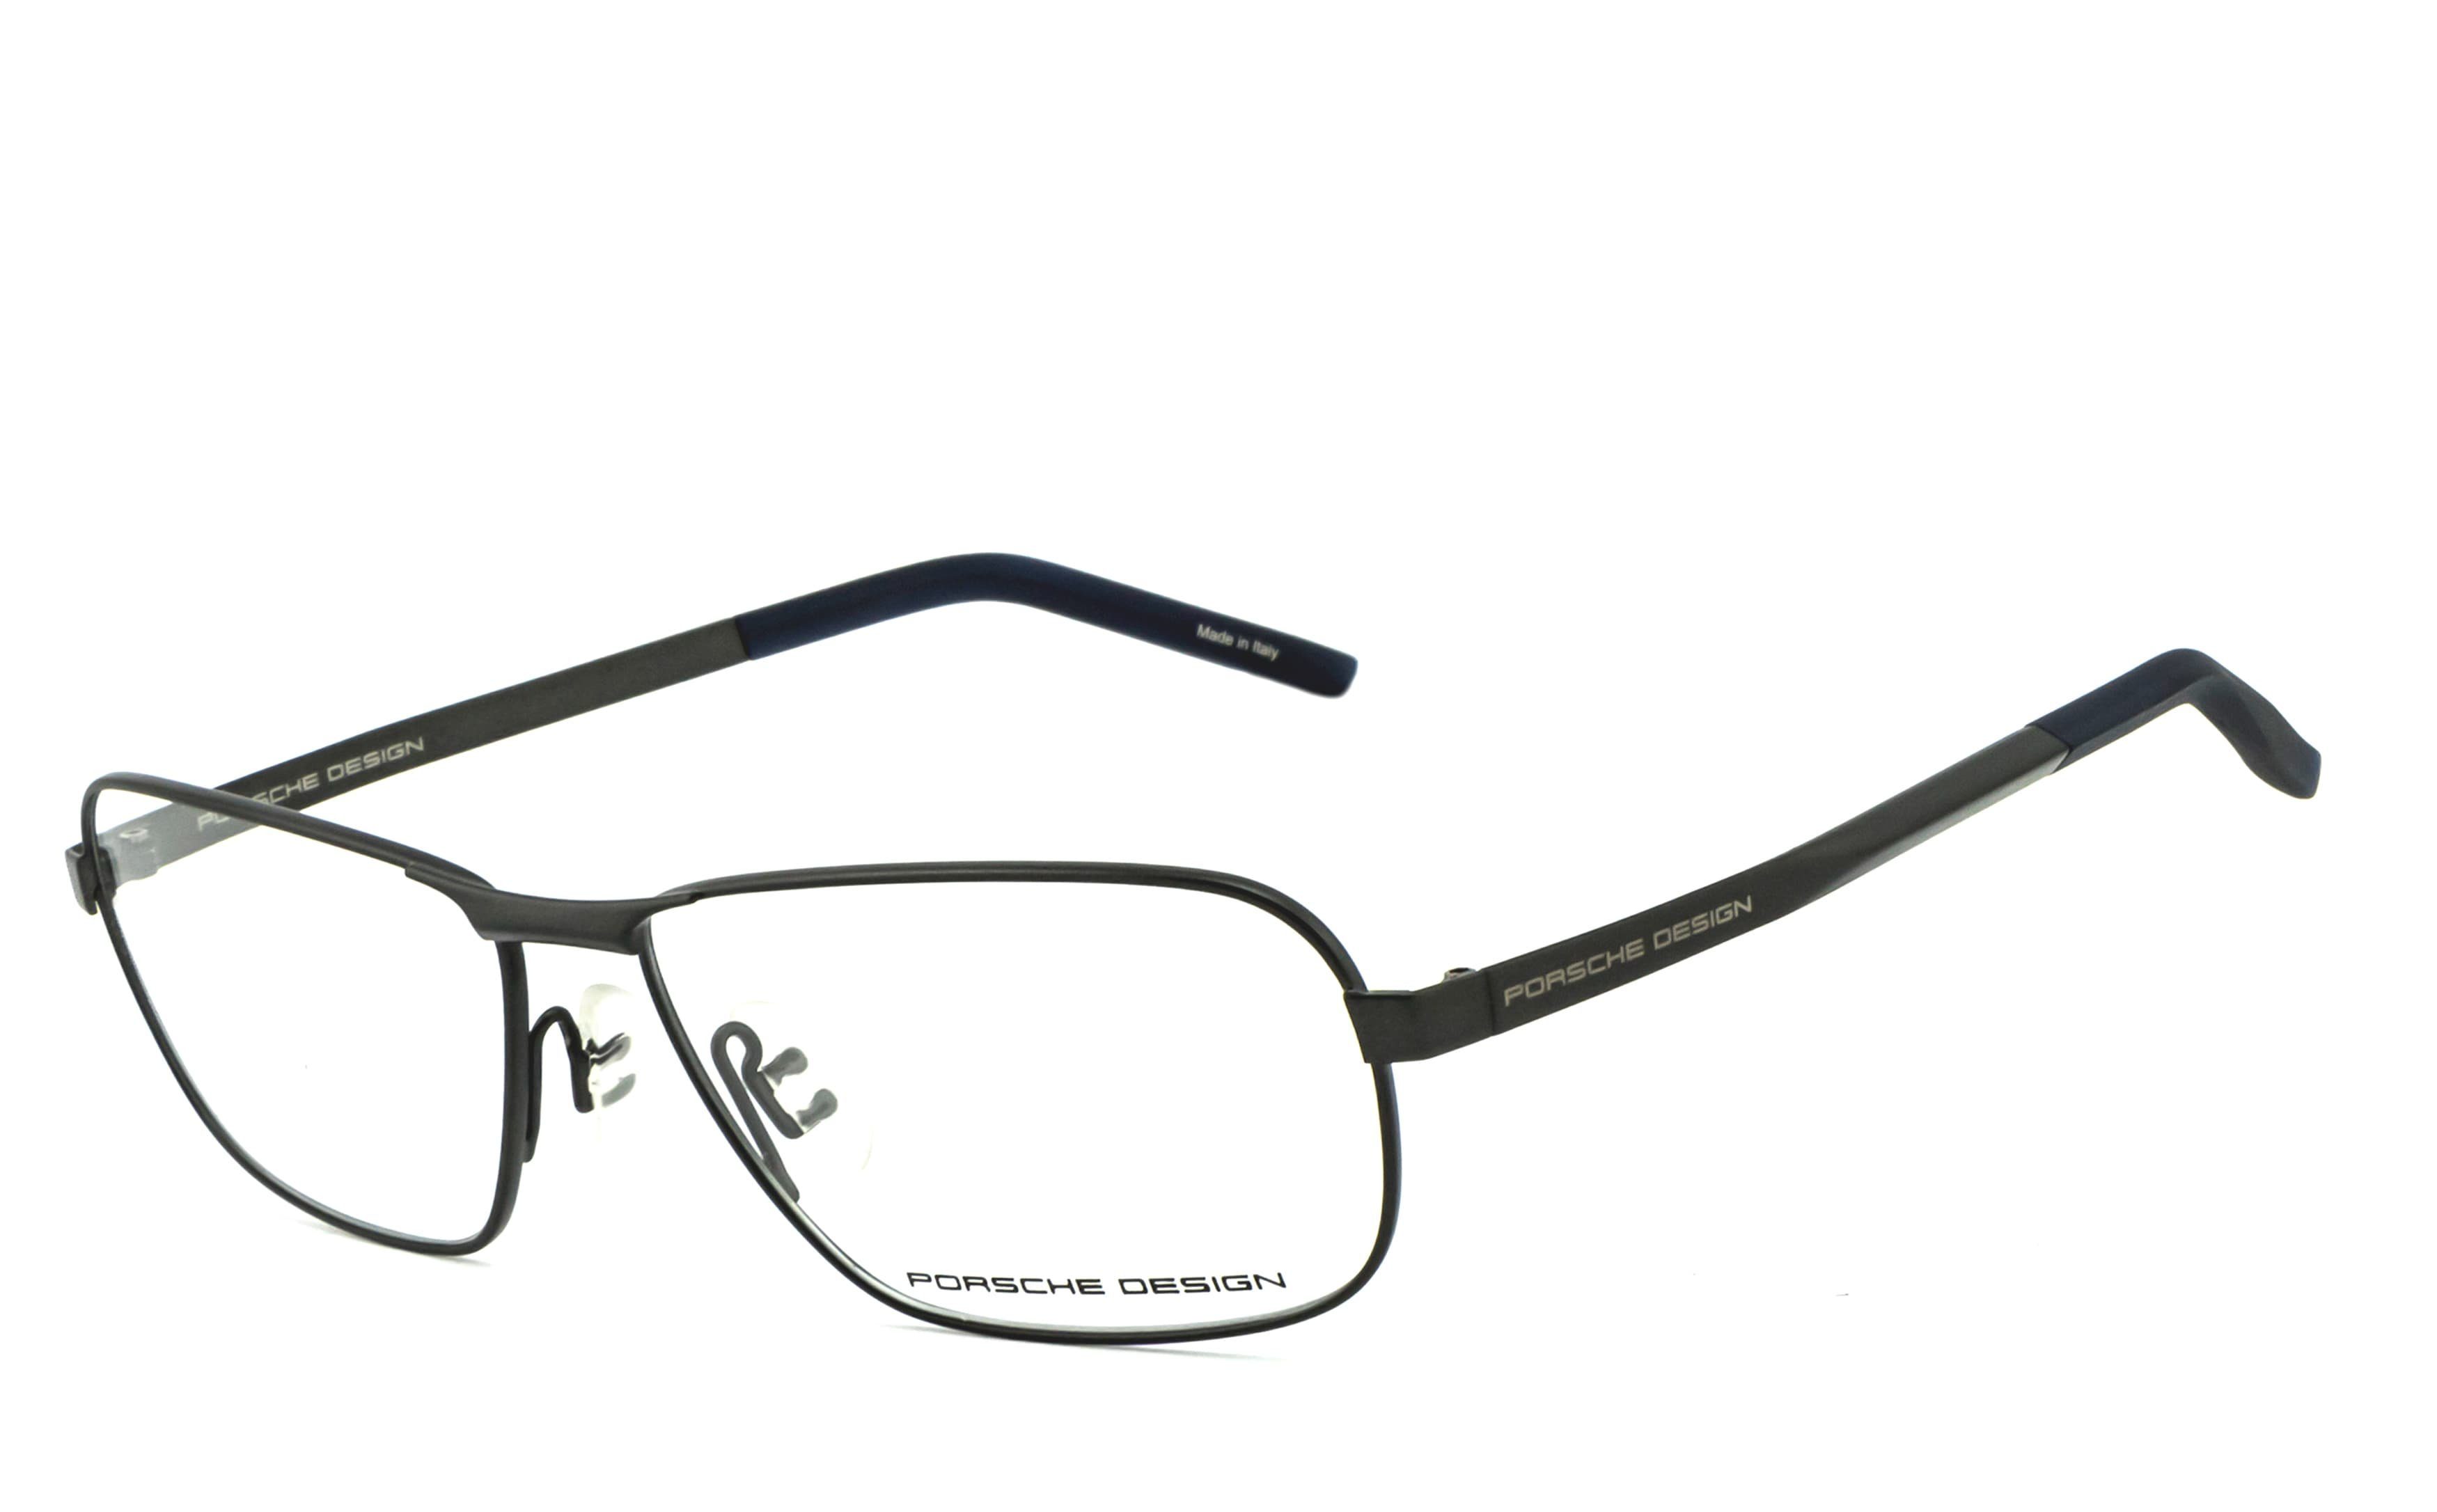 D, P8303 Brille PORSCHE Design Qualitätsgläser HLT®